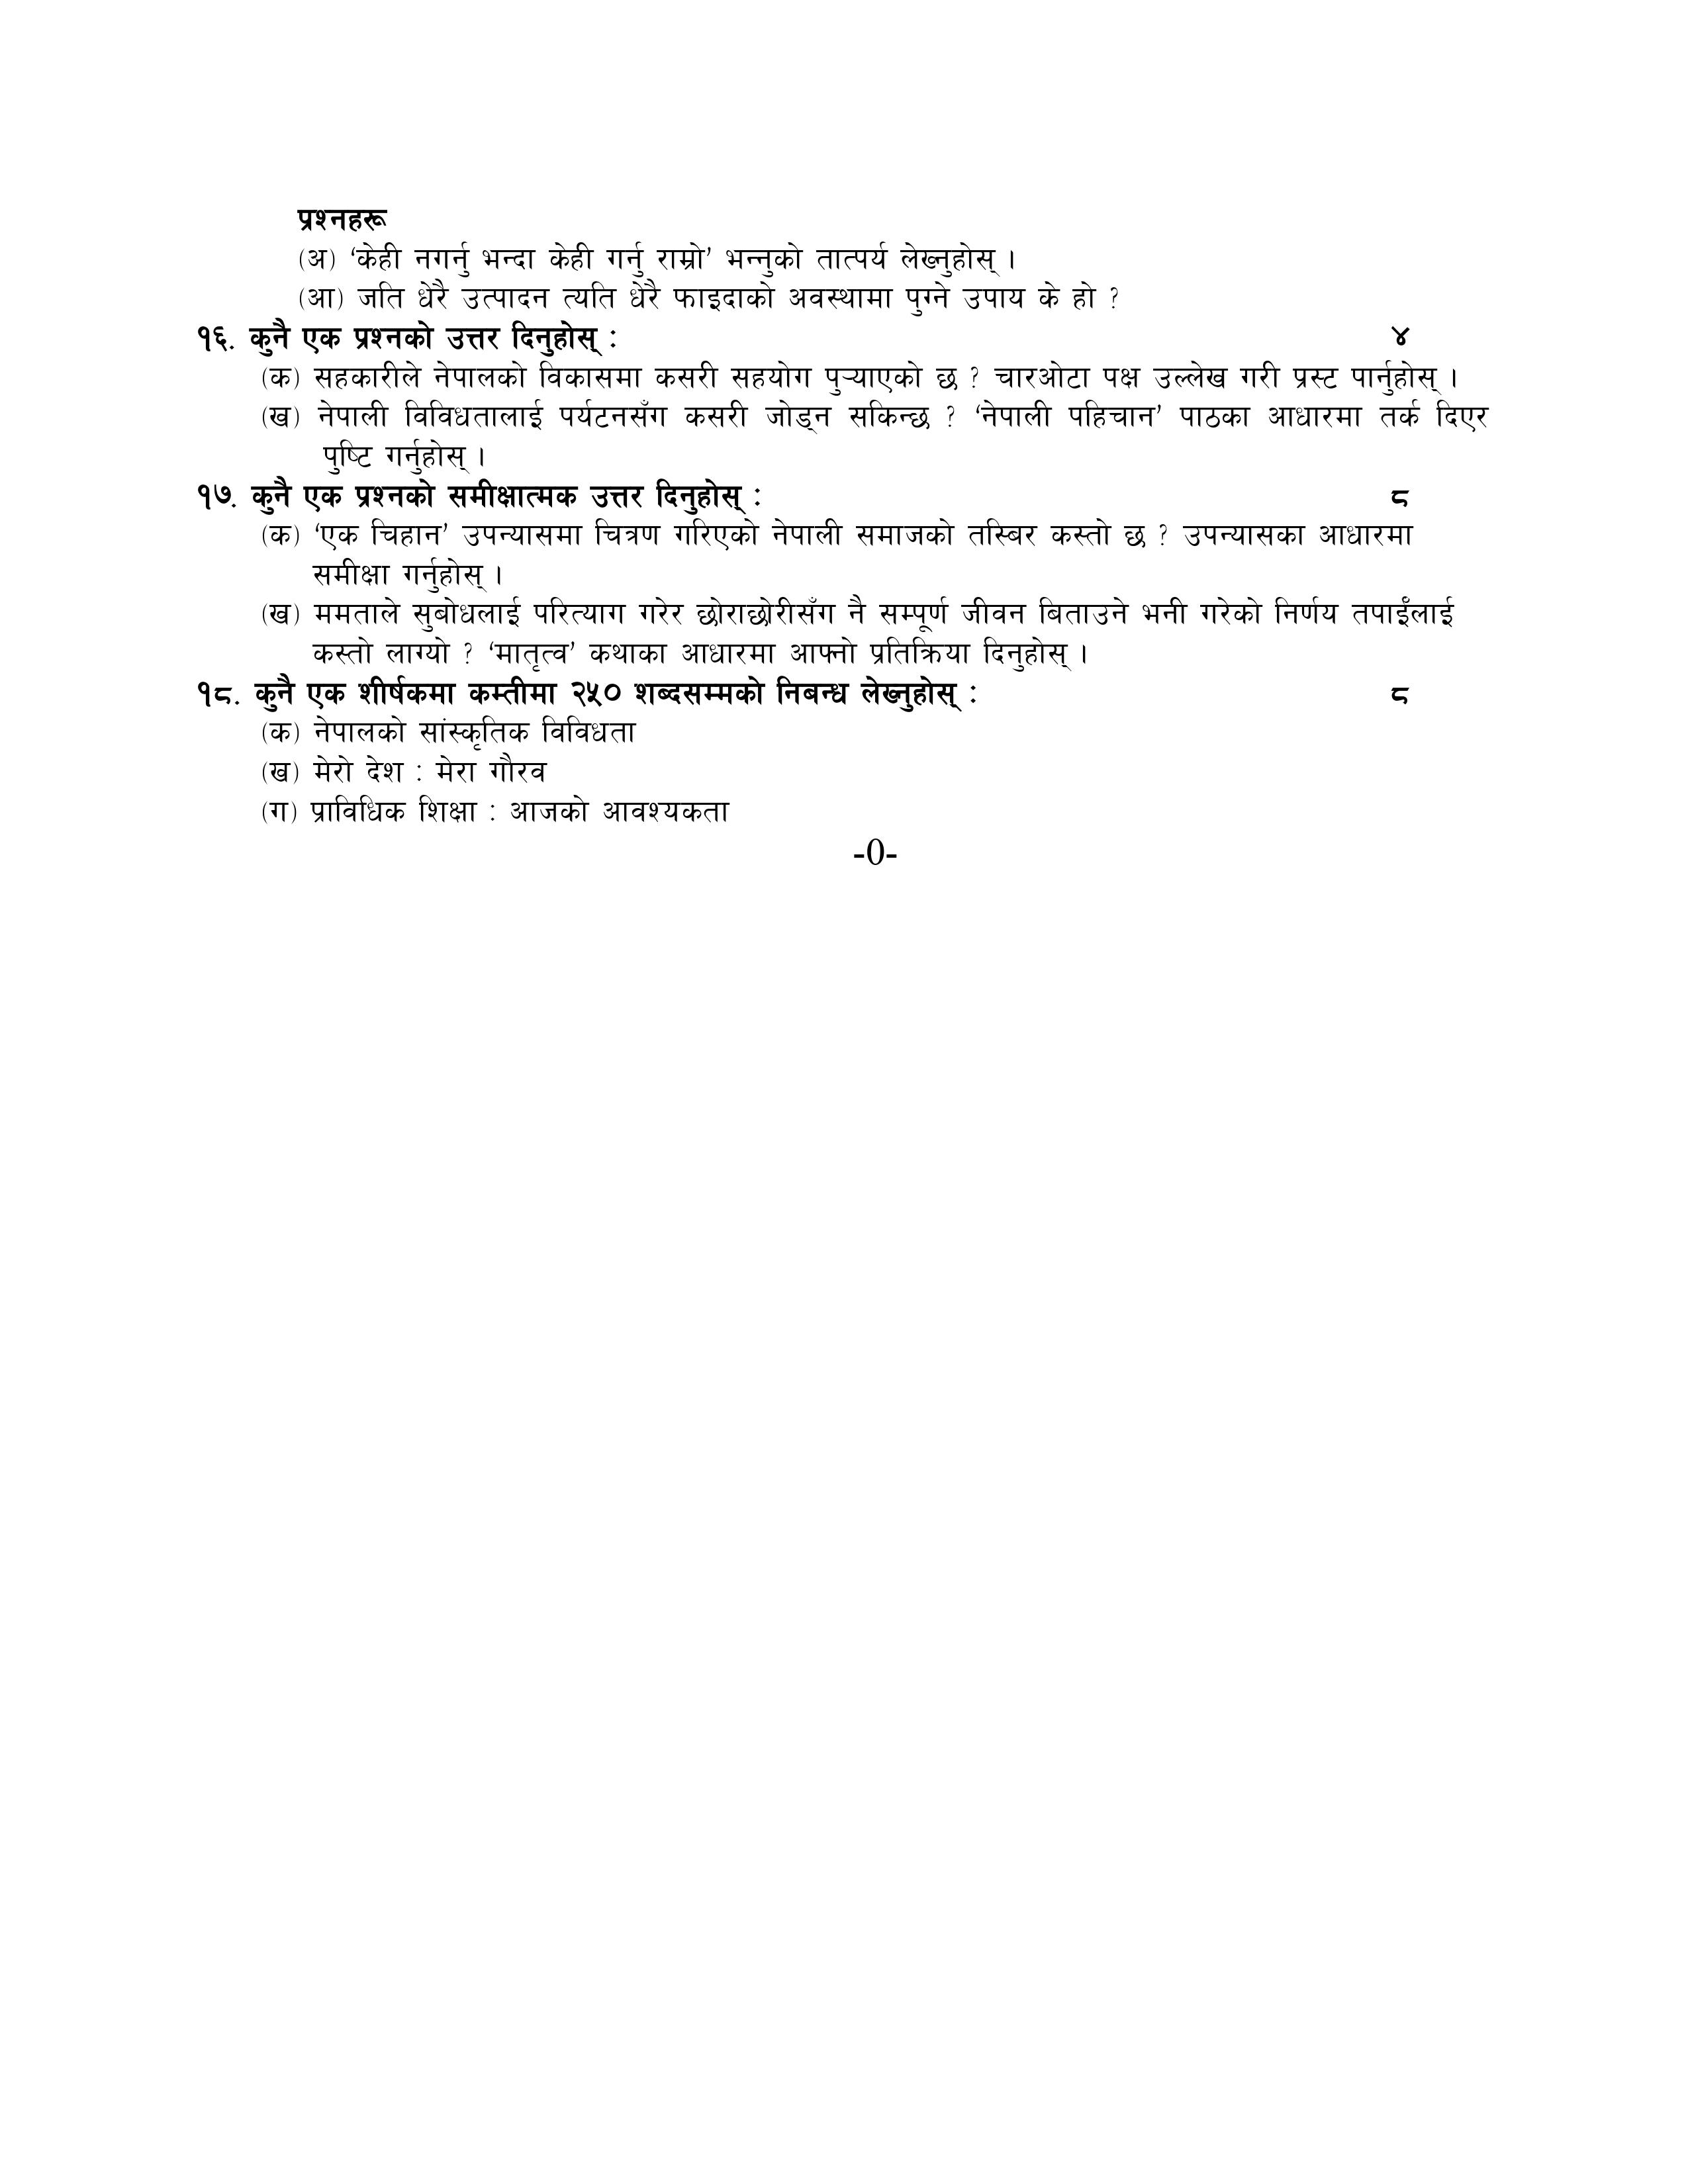 Com. Nepali Model Question: NEB Class 12 Board Exam 2079/80